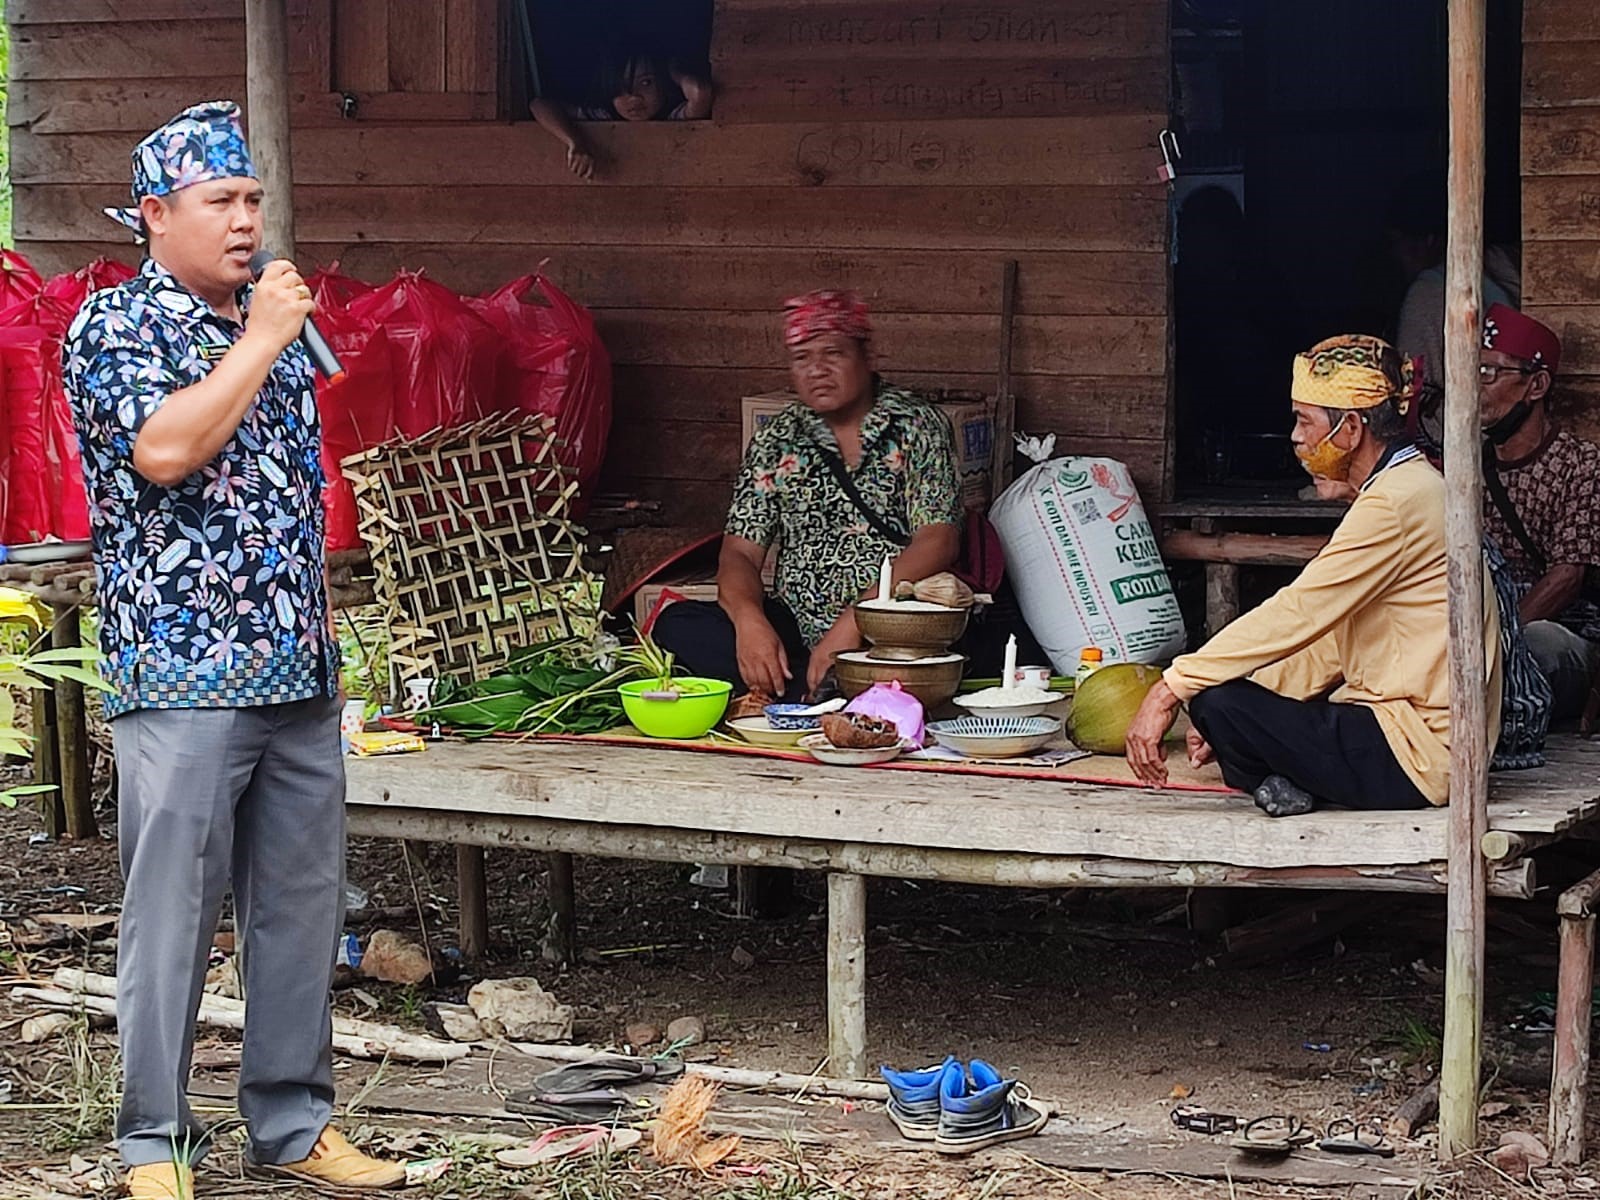 Kades Dorong Superson memberikan sambutan di acara adat pemalasan pembukaan tambang PT Sentosa Laju Sejahtera (SLS) site PT Bumi Barito di Desa Dorong, Kecamatan Dusun Timur, Kamis (27/10). Foto : Res